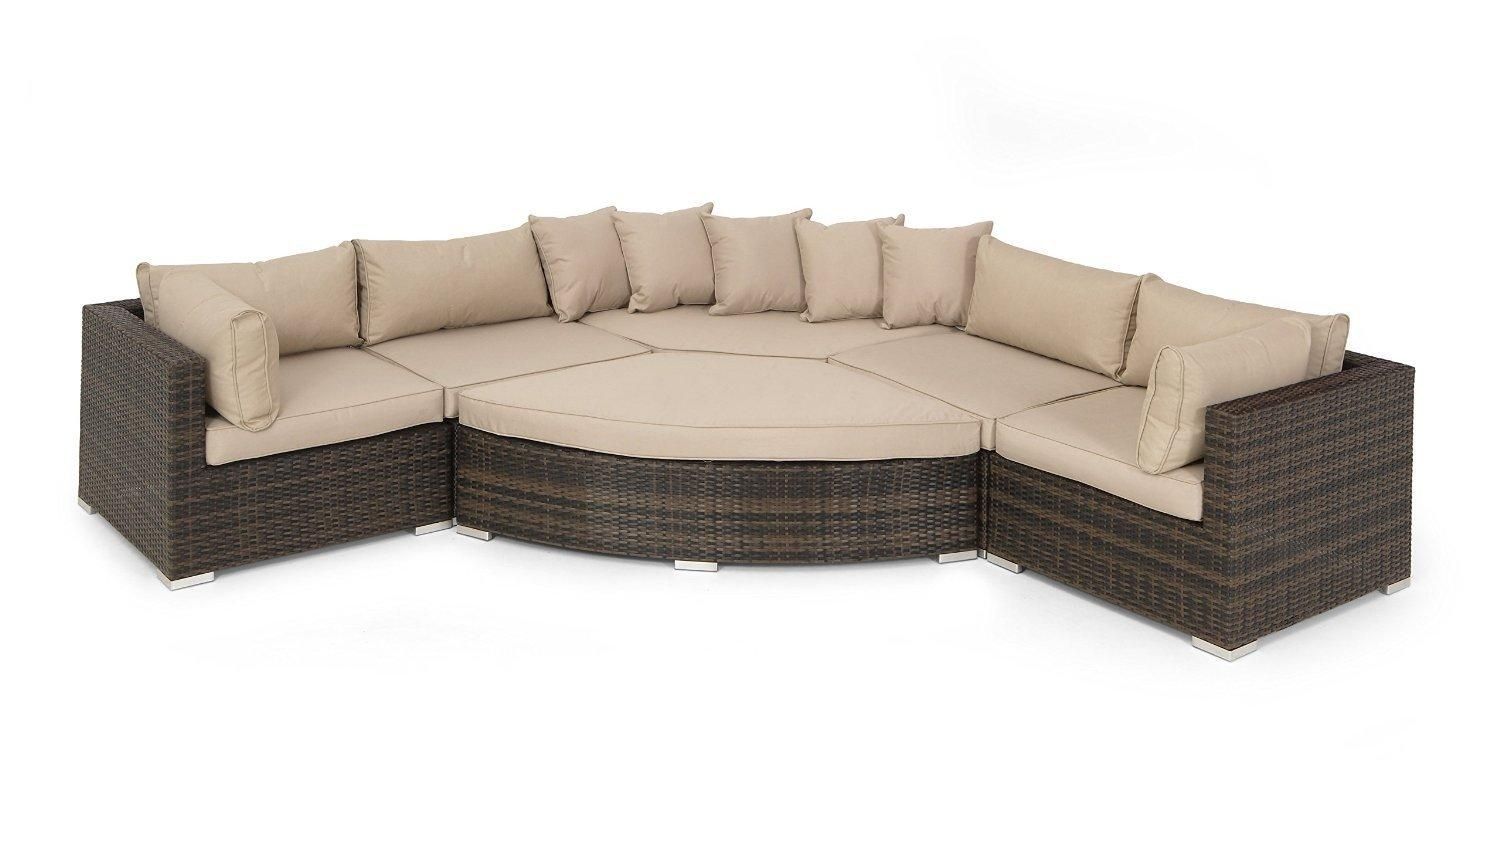 Furniture : Corner Sofa B&q L Shaped Sofa Rates Corner Sofa With Big Joe Modular Sofas (View 14 of 20)